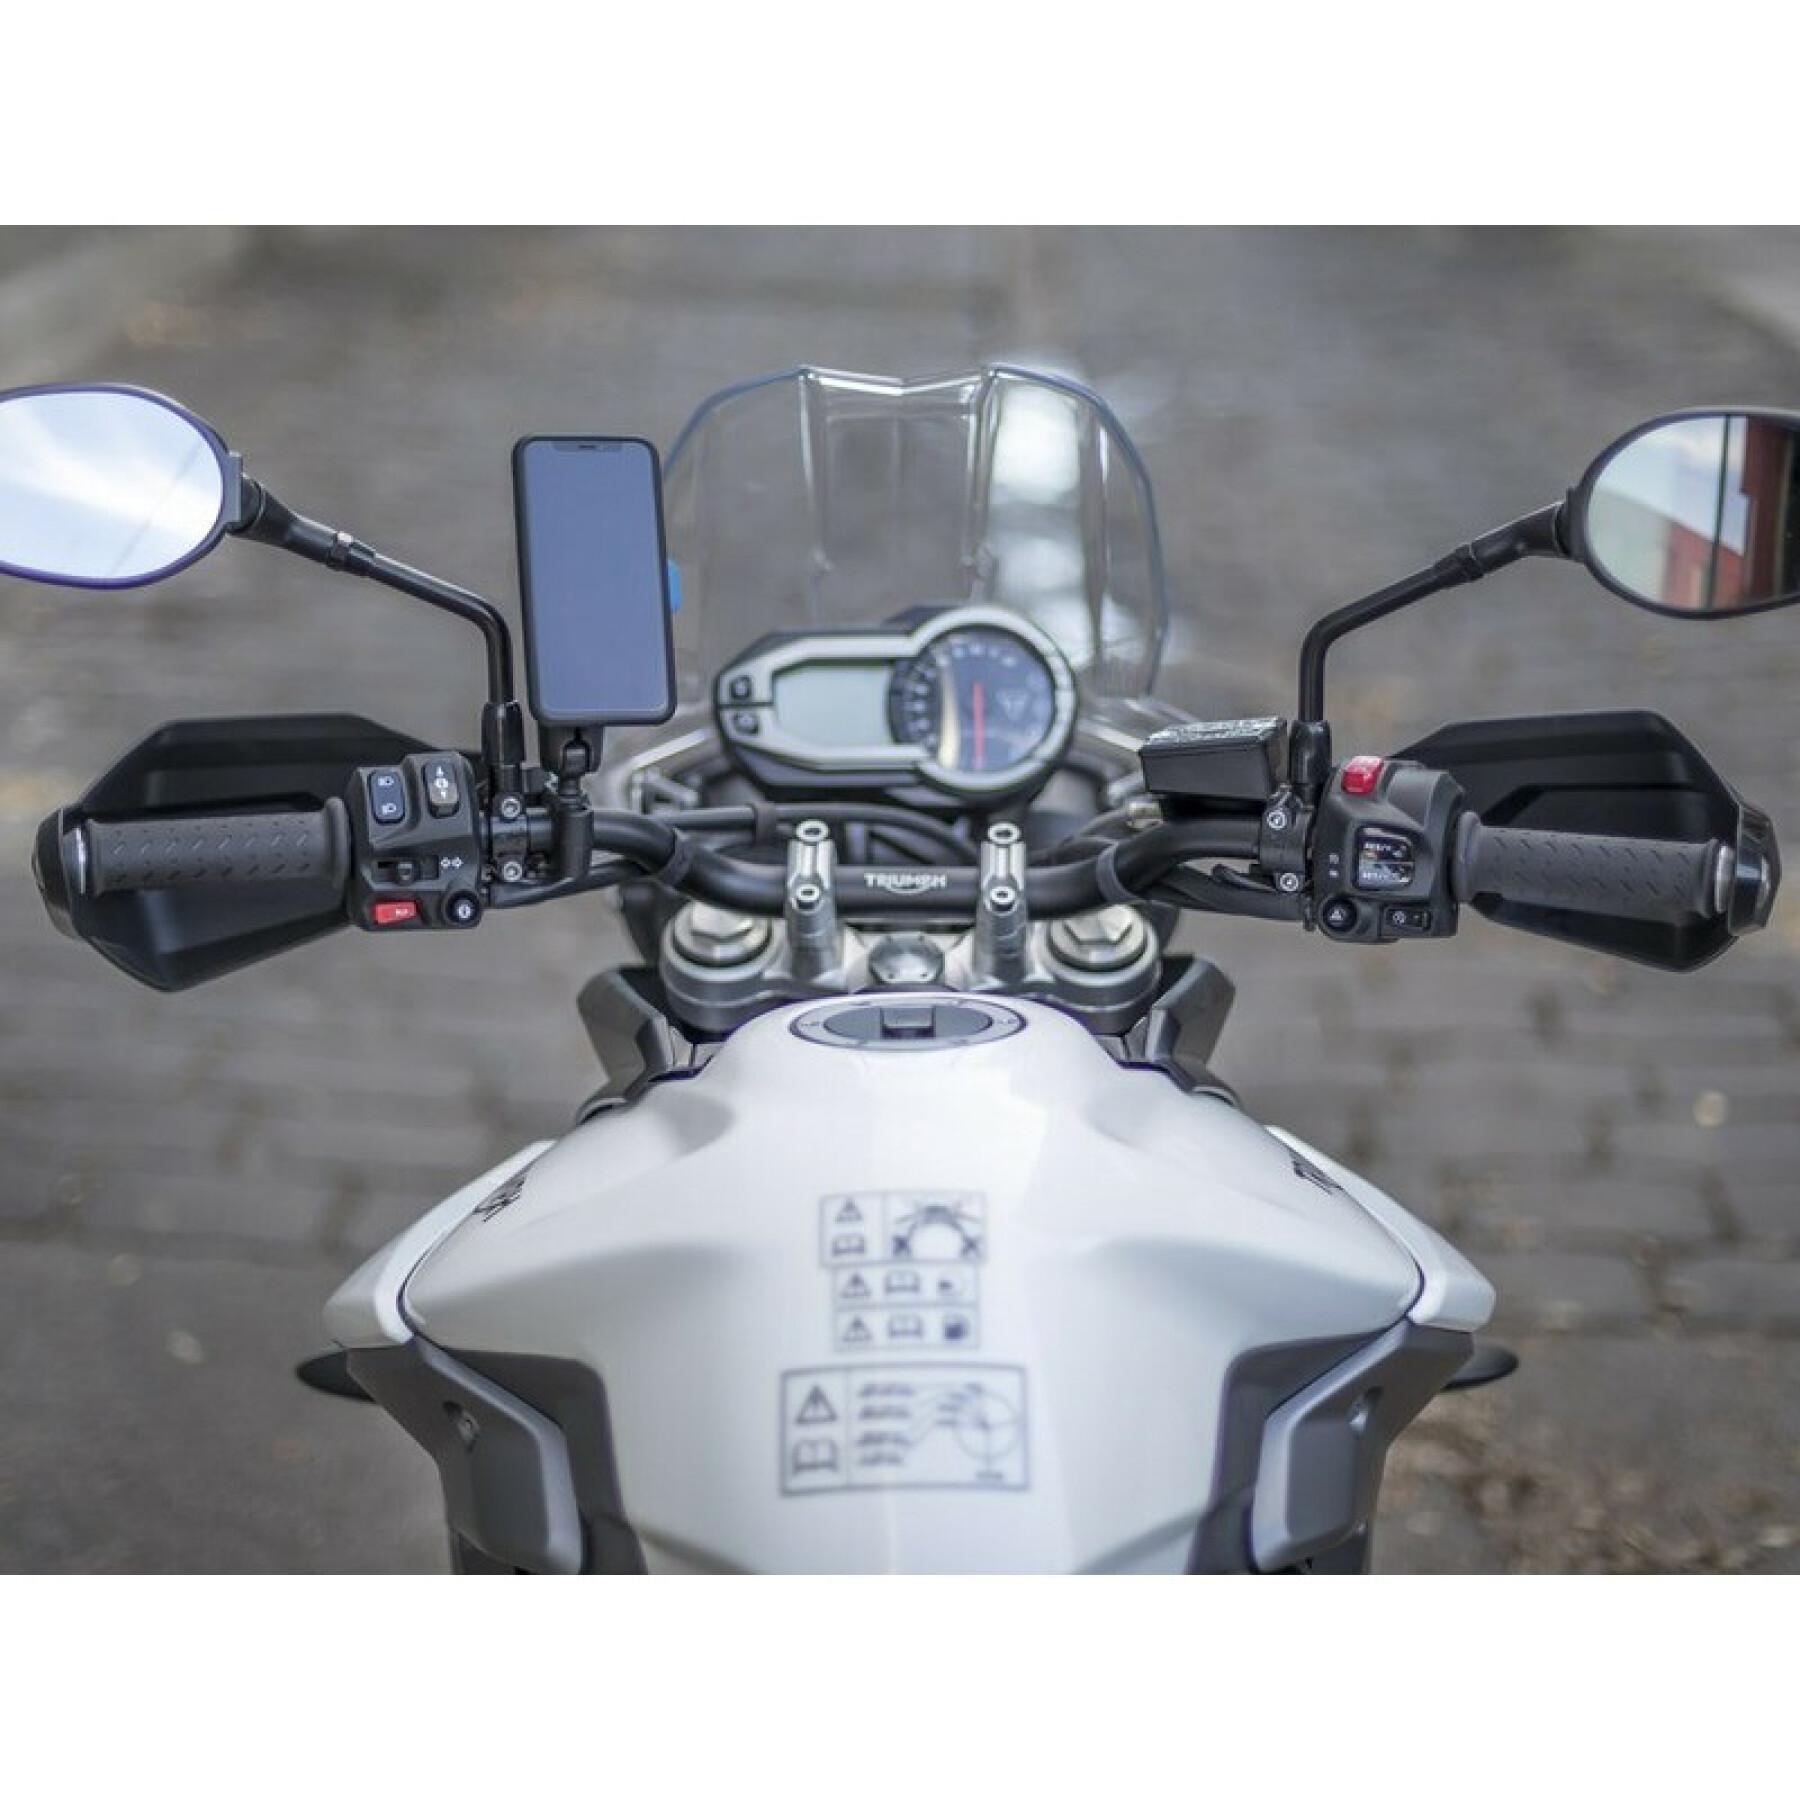 Motorcycle mount ball adapter Quad Lock RAM